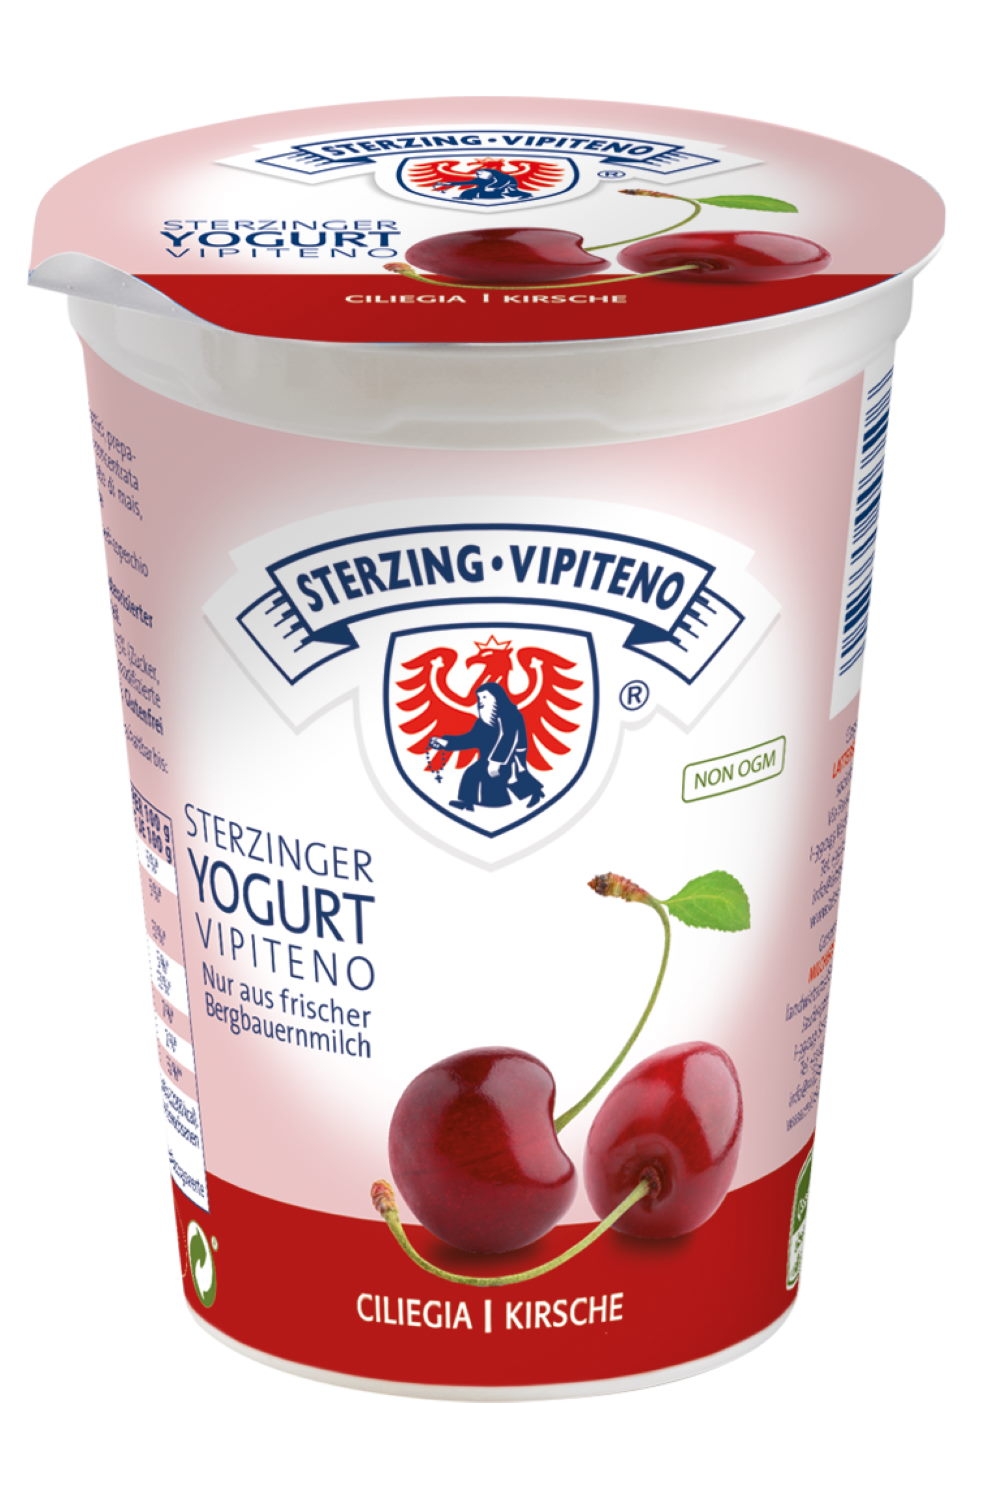 https://karadarshop.com/26101-large_default/yogurt-ciliegia-6x500g-latteria-vipiteno.jpg